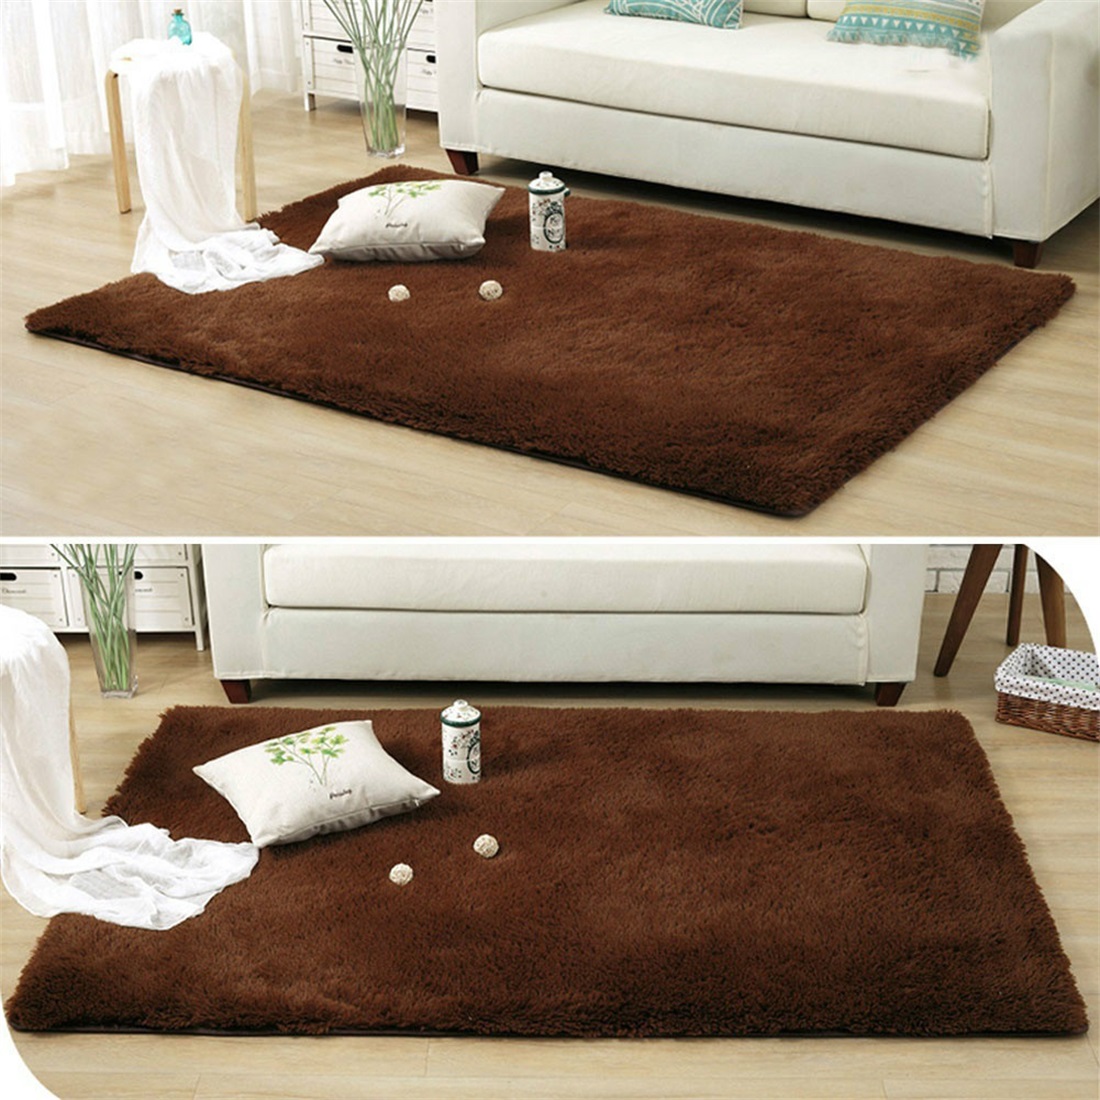 Fluffy Rugs Shaggy Area Rug Carpet Home Carpet Floor Bedroom Mat USA Hot Sell 